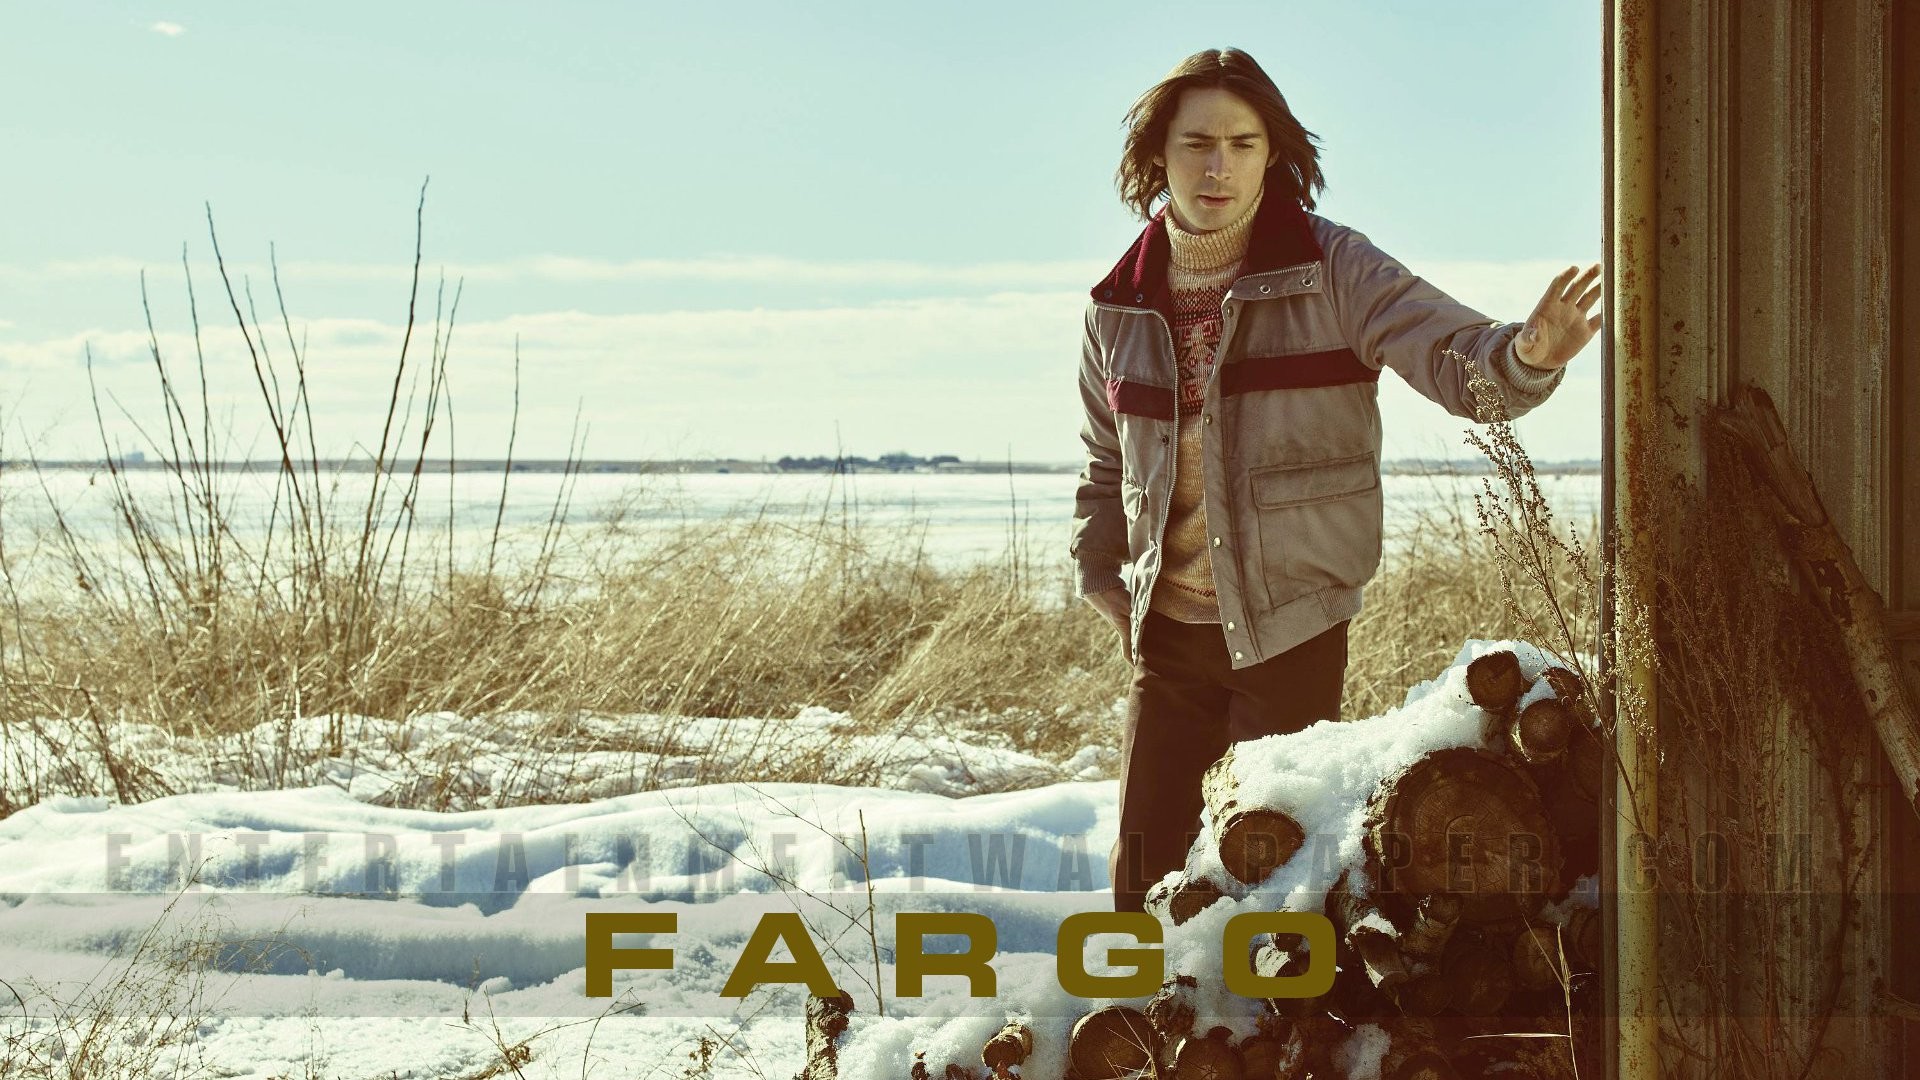 1920x1080 Fargo Wallpaper - Original size, download now.